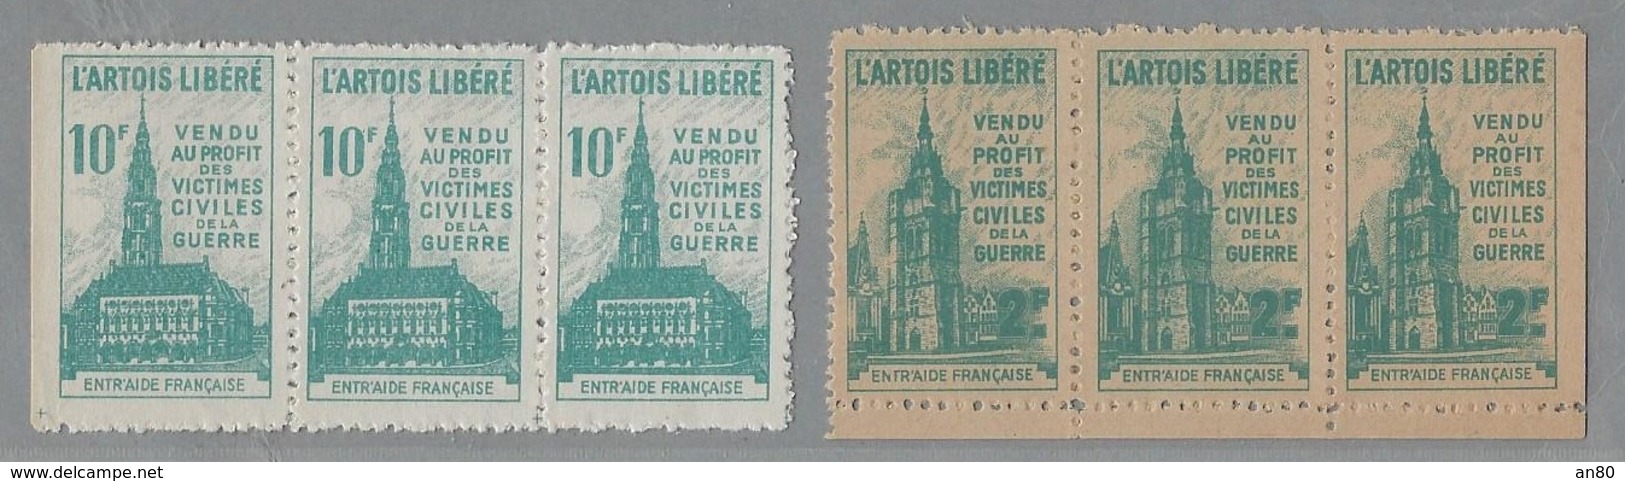 Artois Libéré - Military Heritage